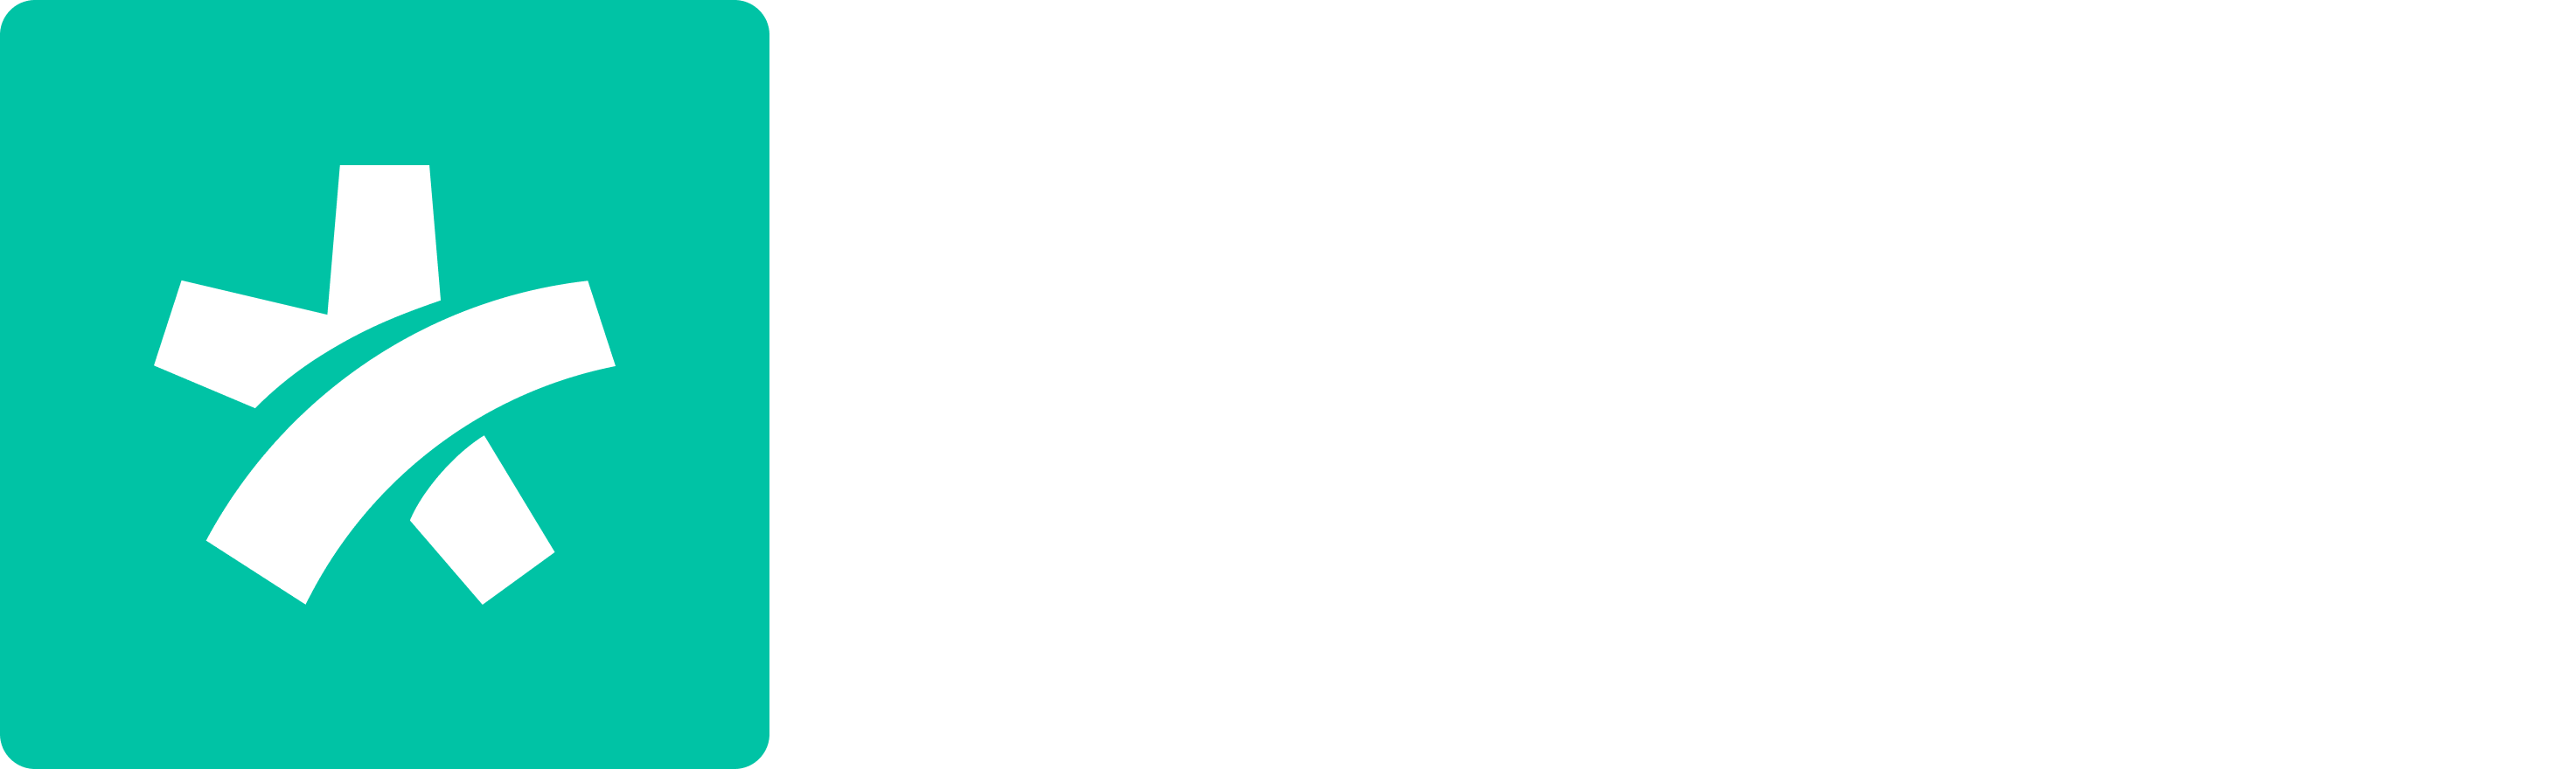 doctoralia-phone-logo-primary-white